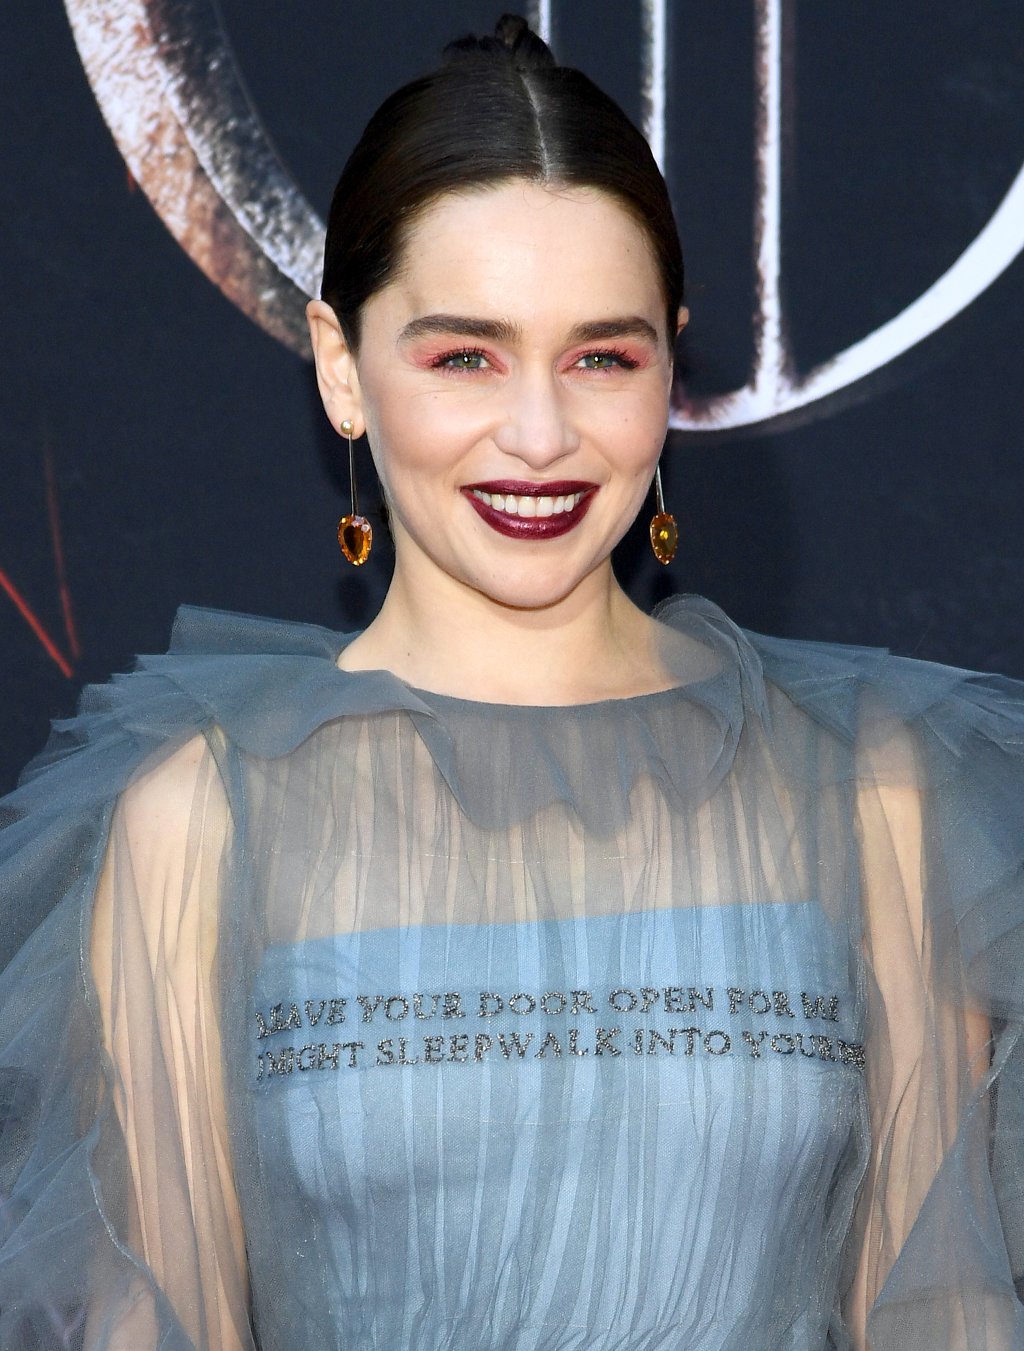 Emilia Clarke na premiere de Game Of Thrones em NY